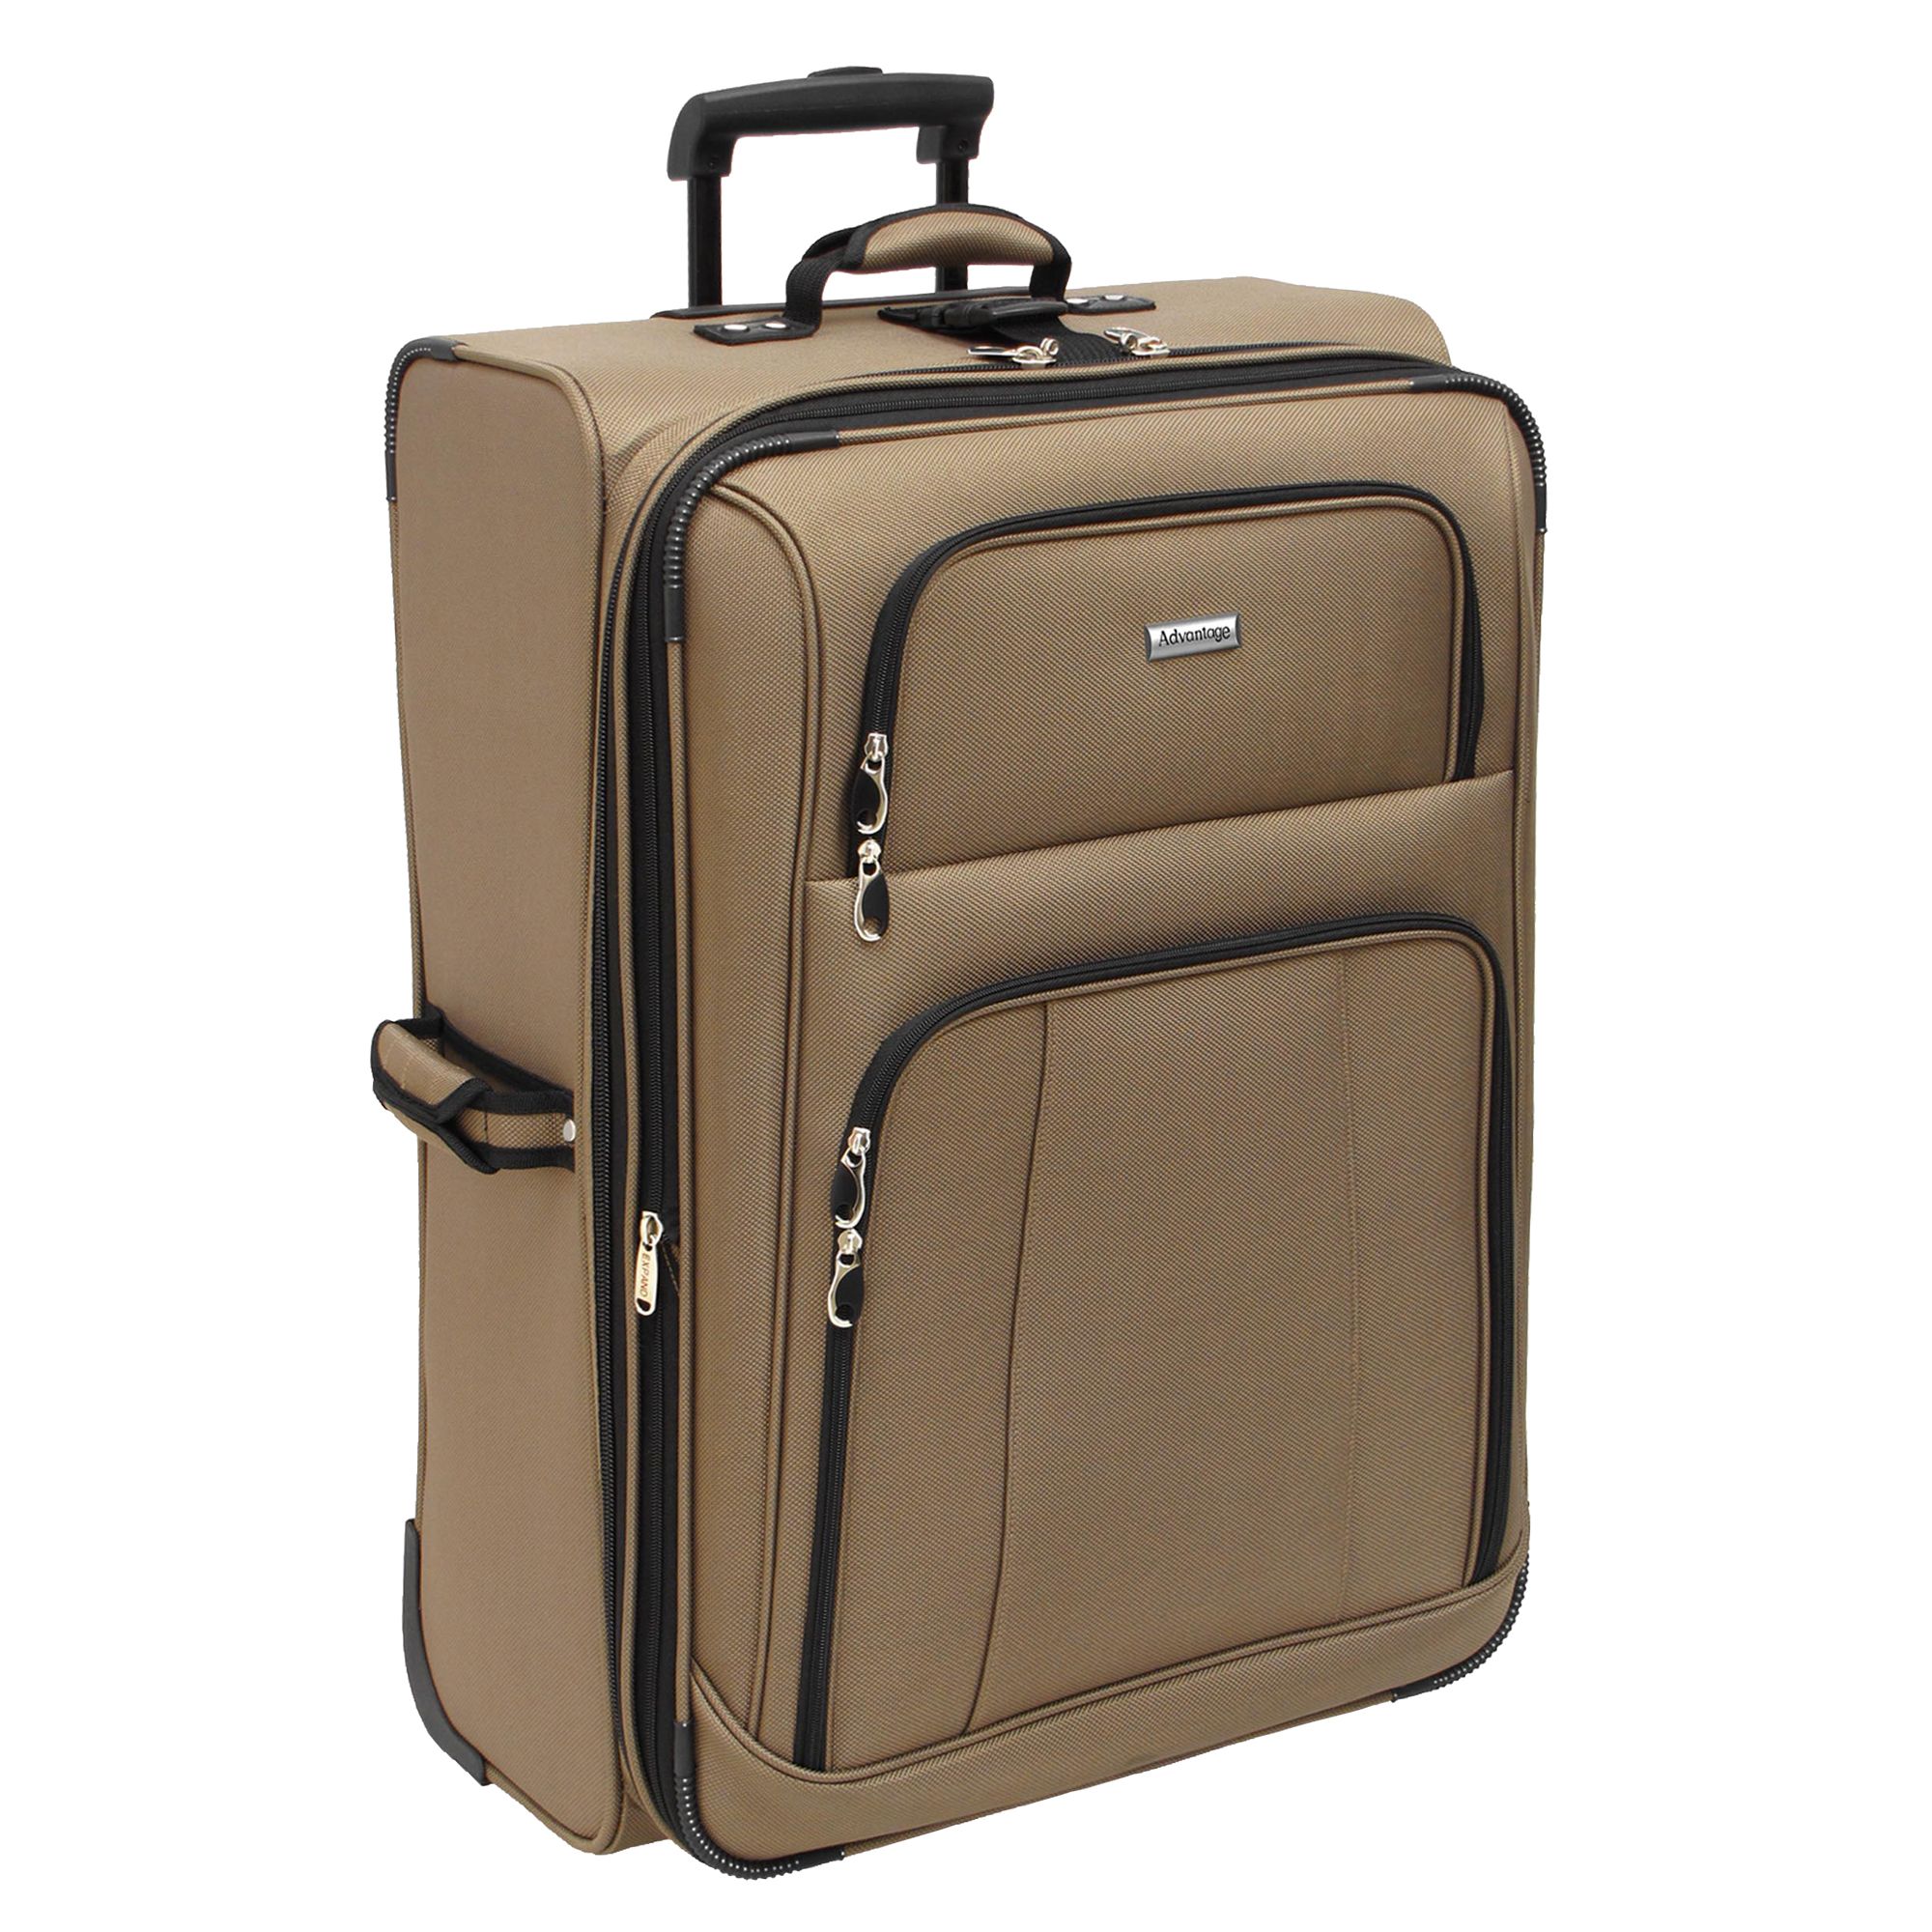 Advantage Luggage 28" Upright Rolling Suitcase - Taupe